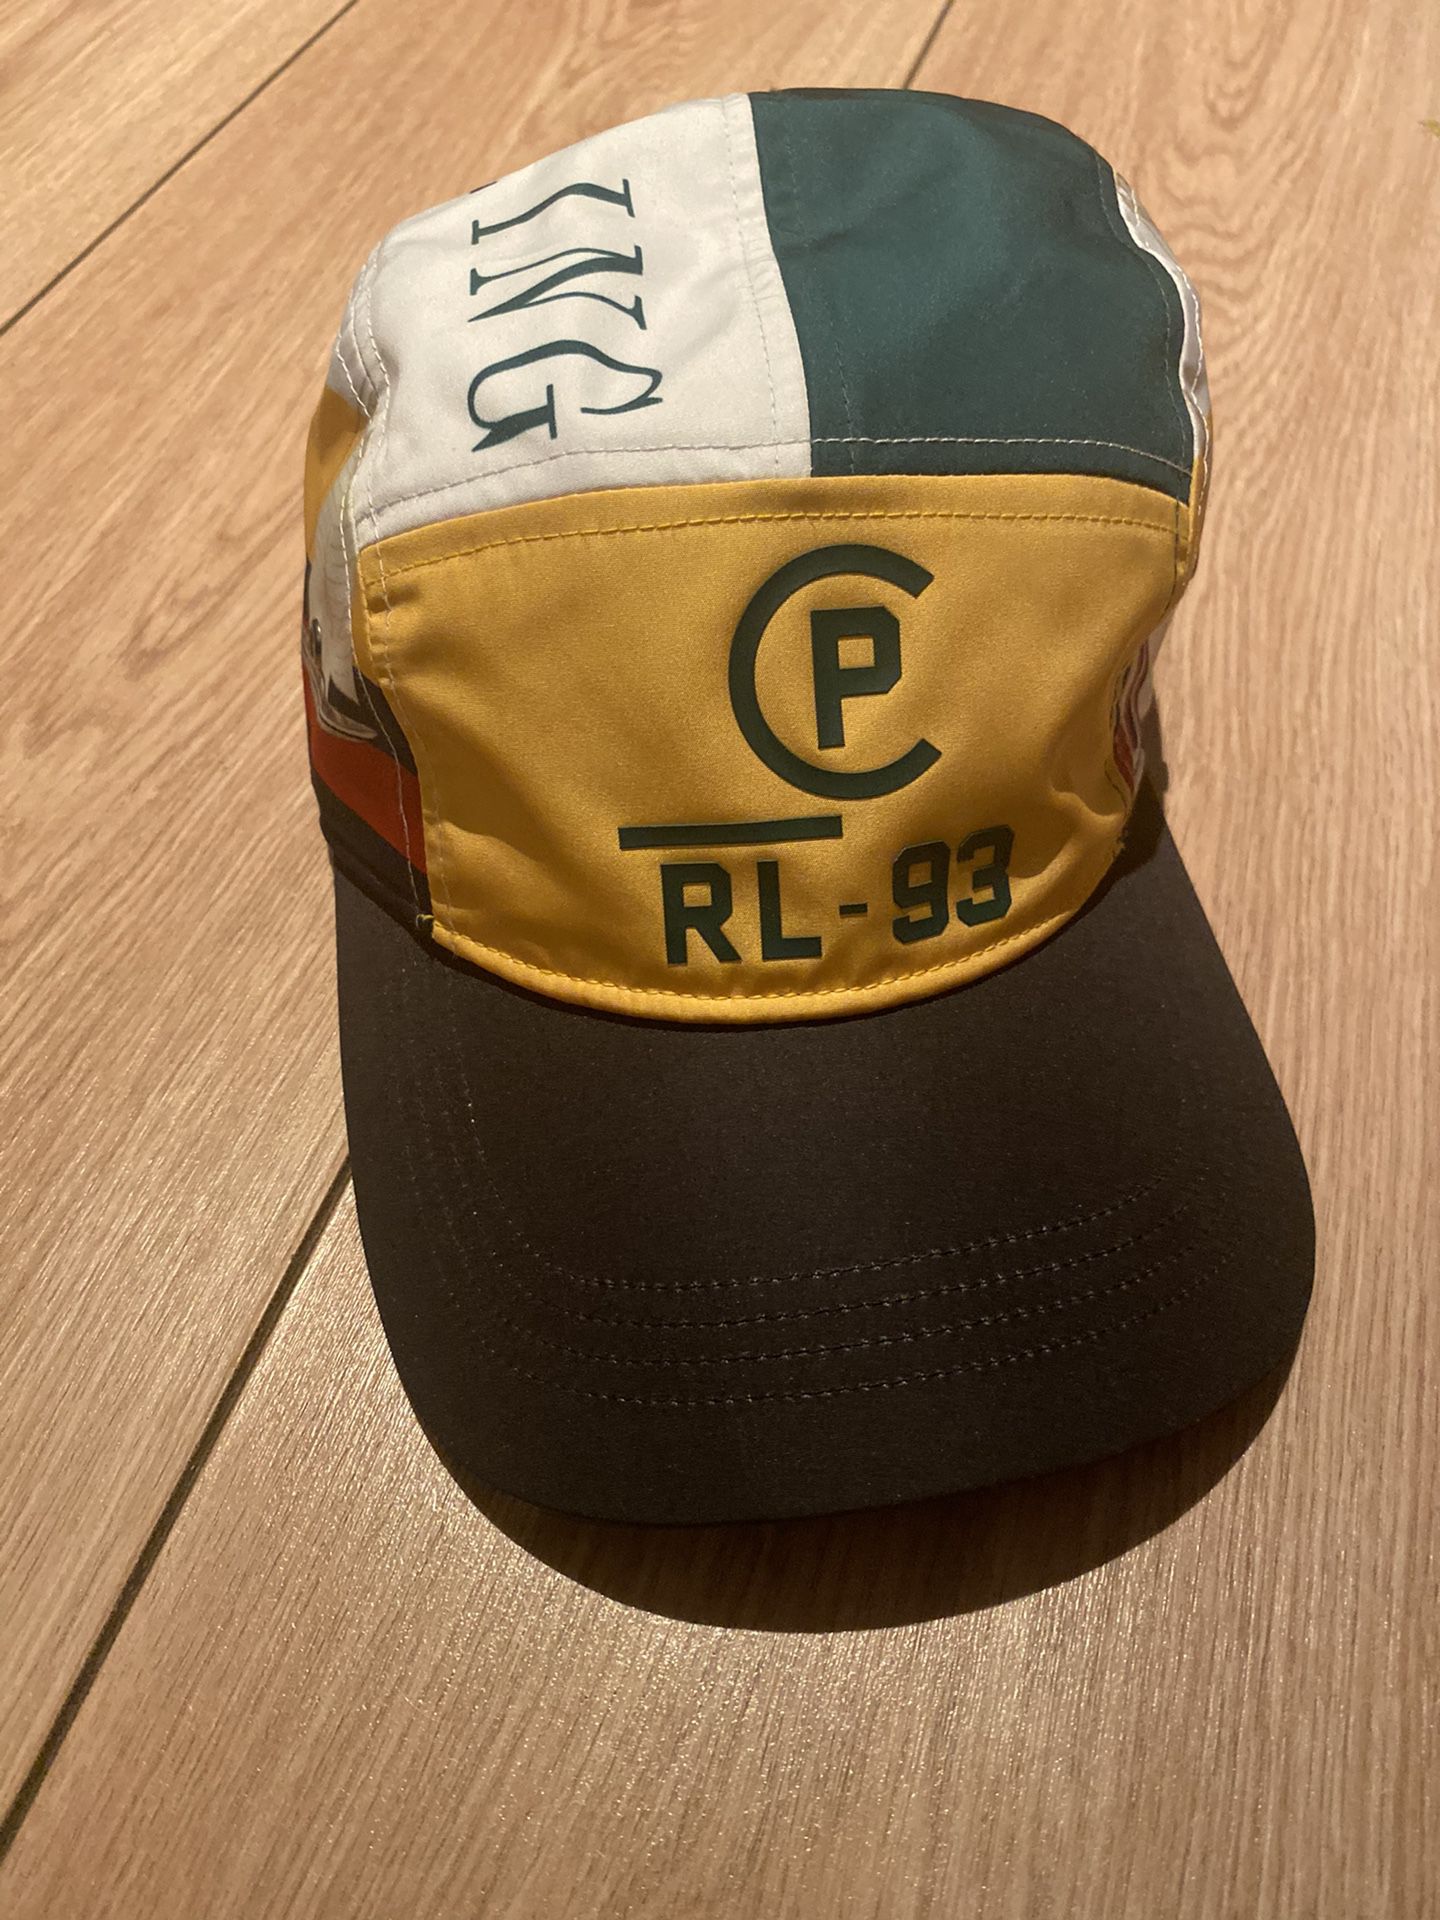 POLO SPORT RALPH LAUREN STADIUM 5 PANEL CAP CP-93 REGATTA SAILING YACHT CLUB HAT